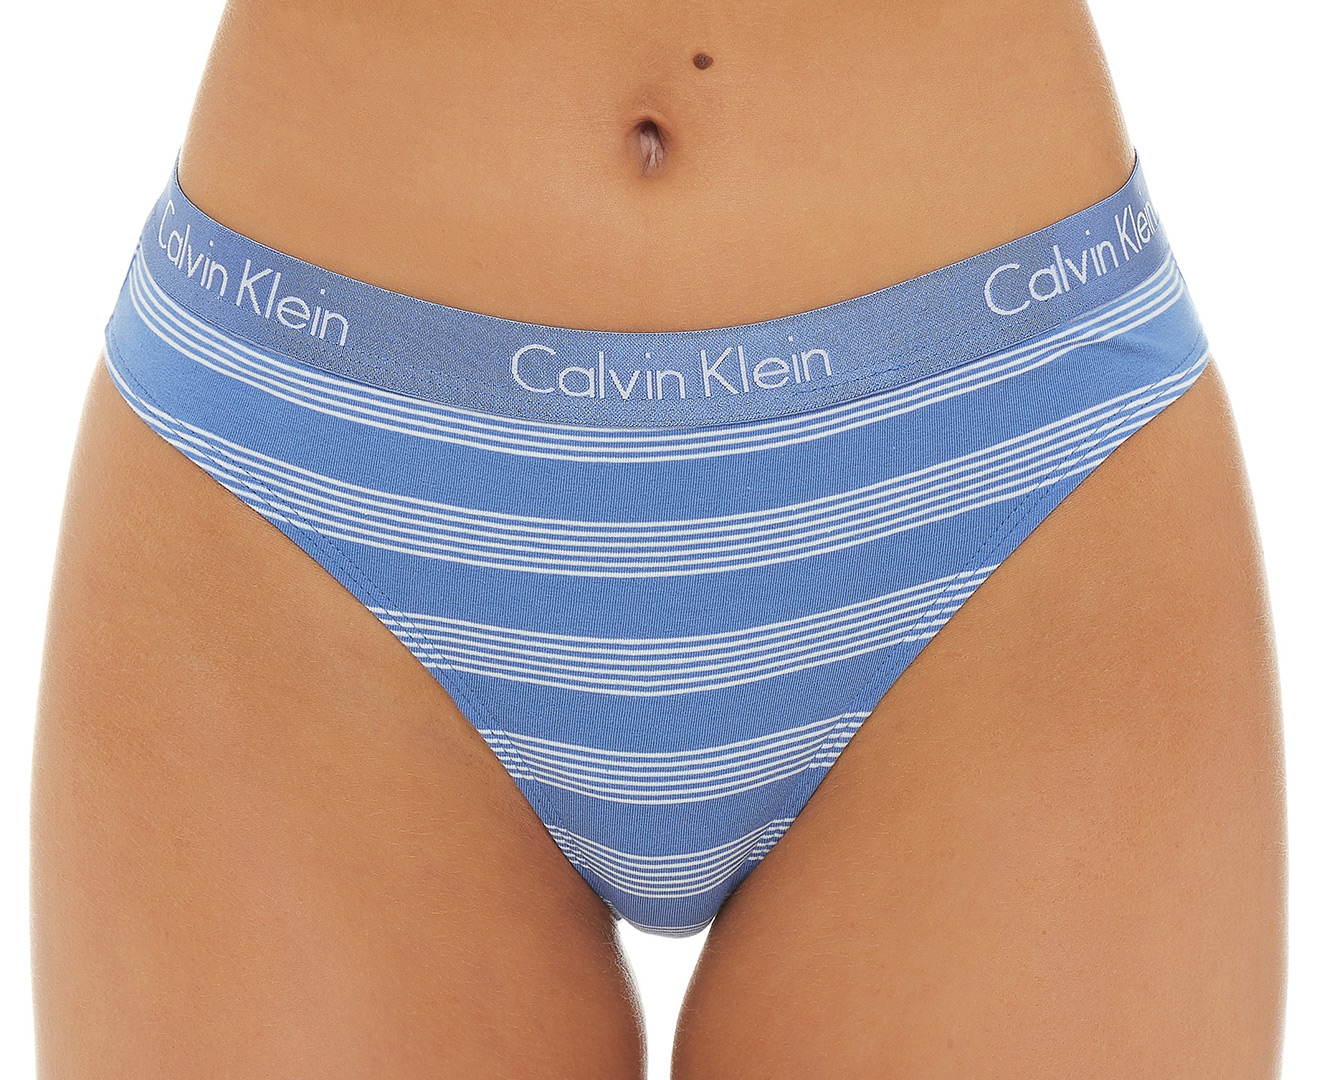 Calvin Klein Women's Motive Cotton Thong 3-Pack - Royalty/Blue